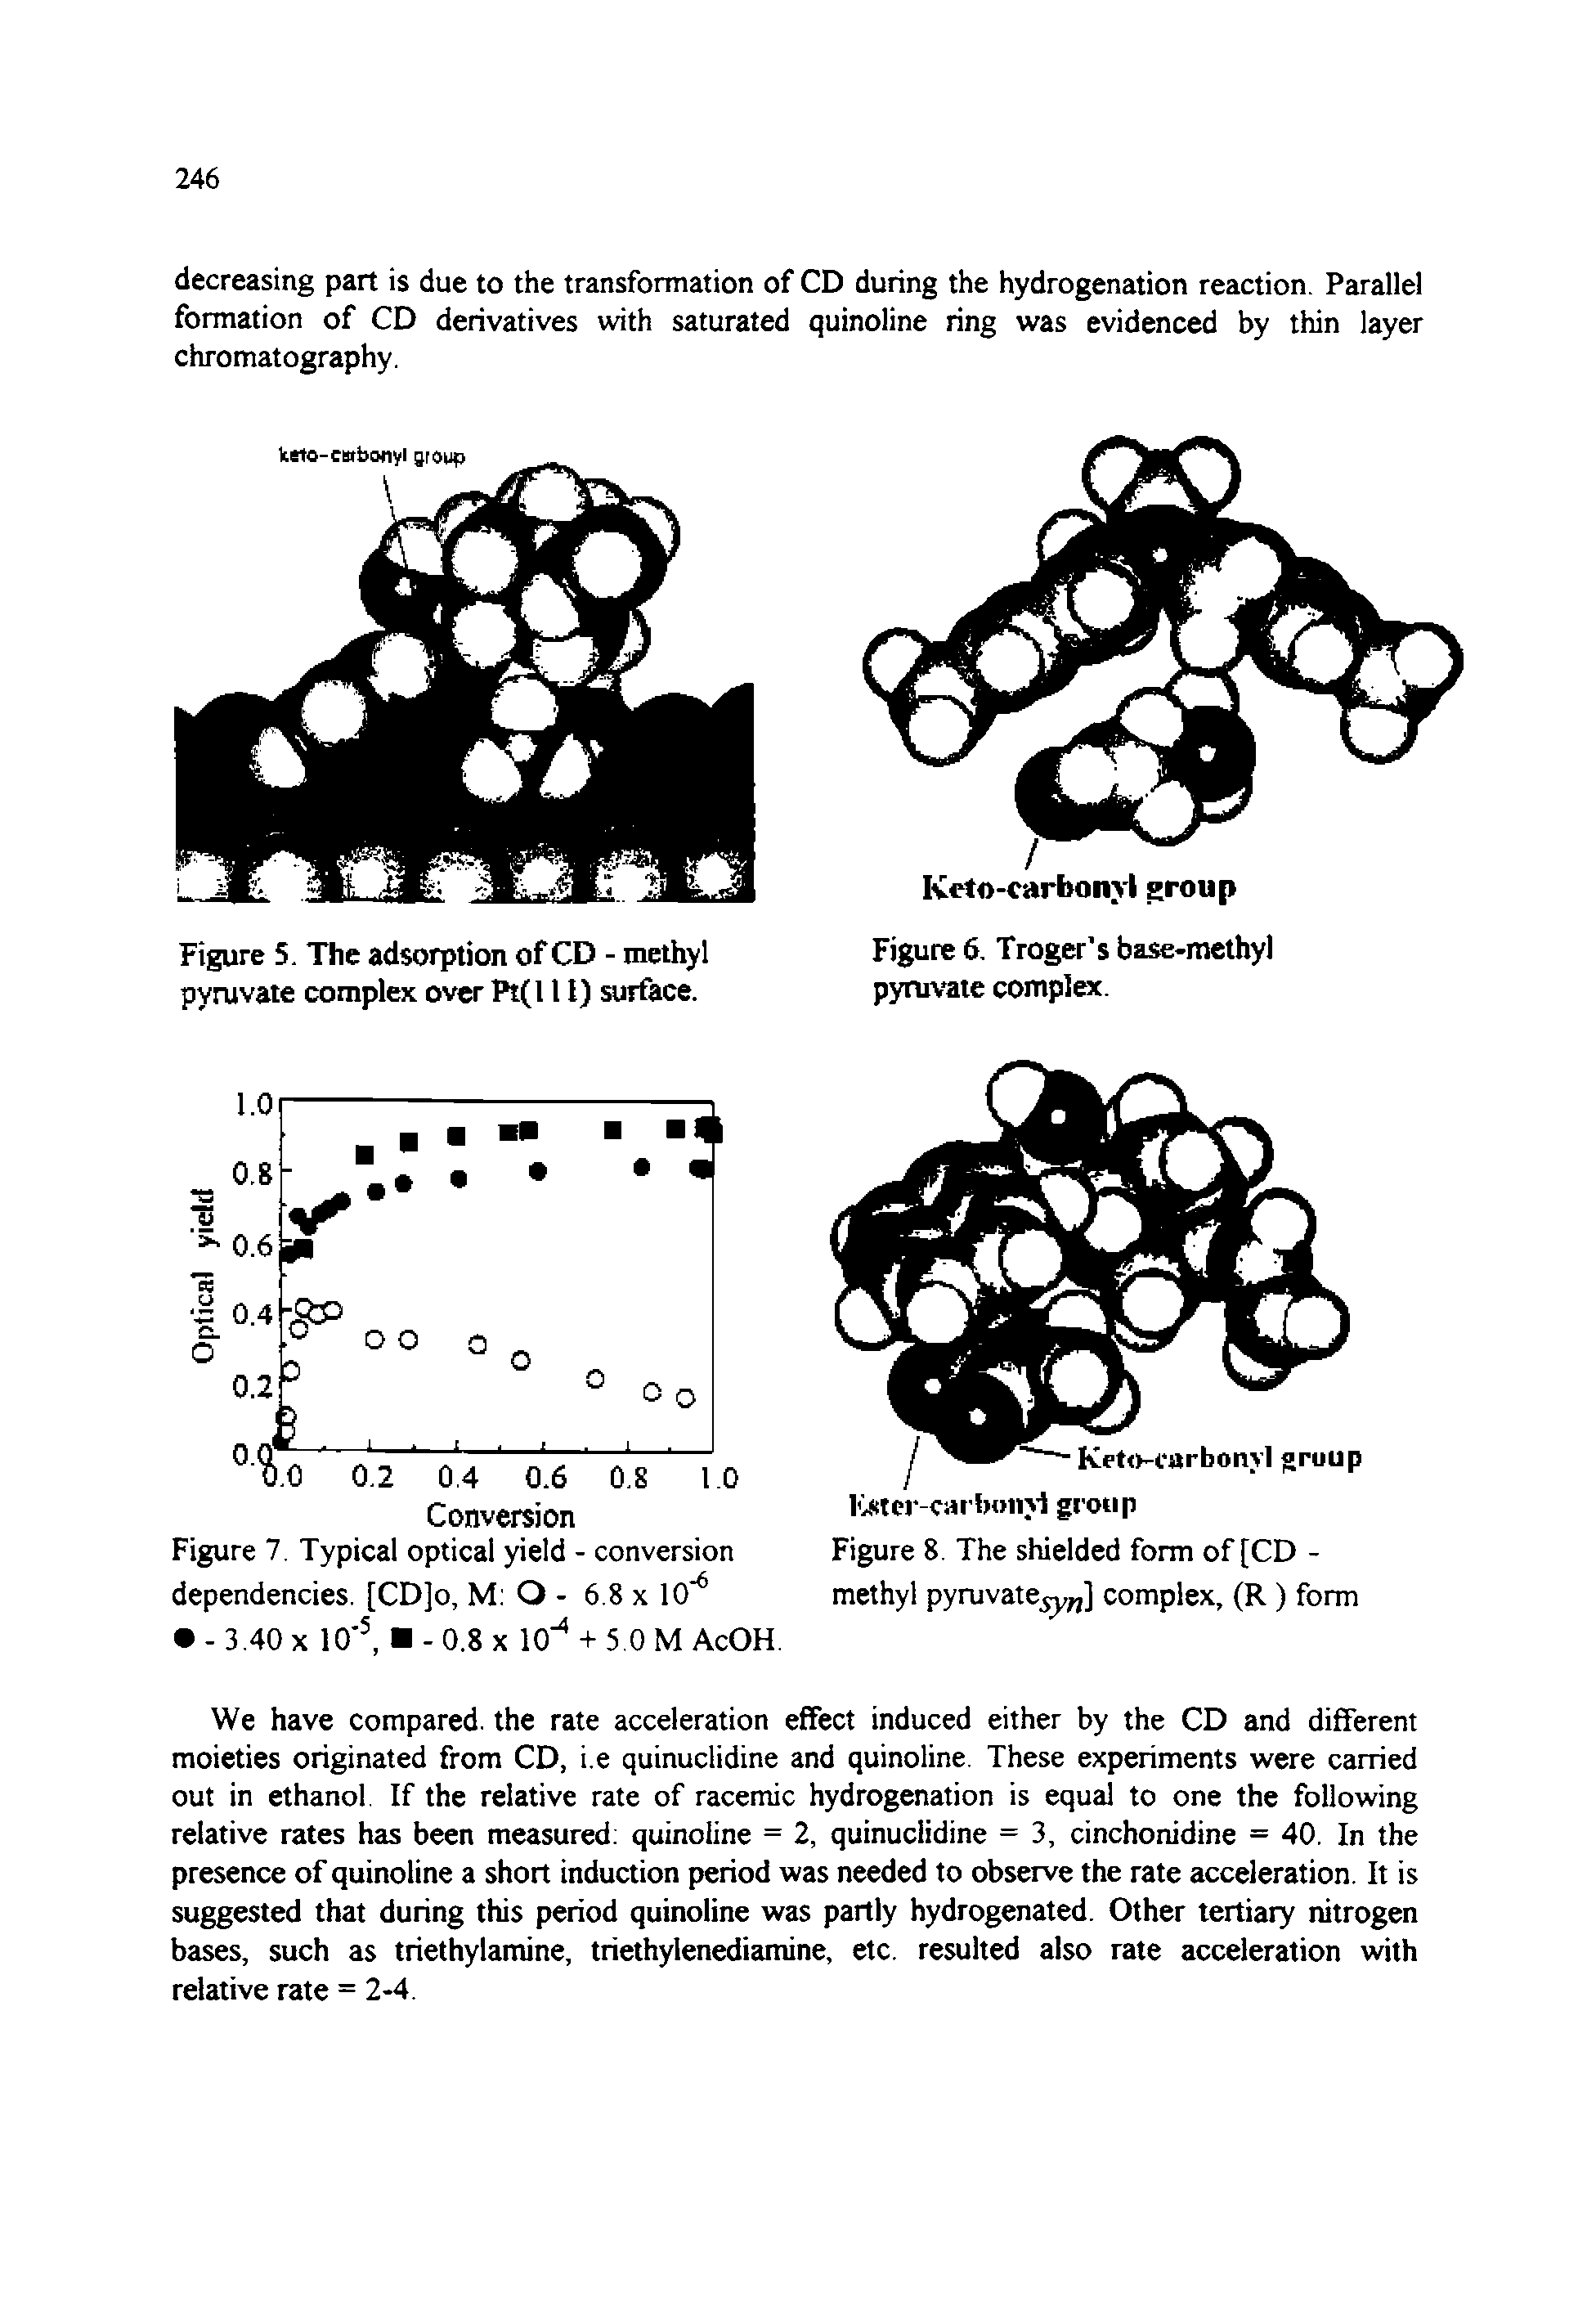 Figure 6, Troger s base-methyl pyruvate complex.